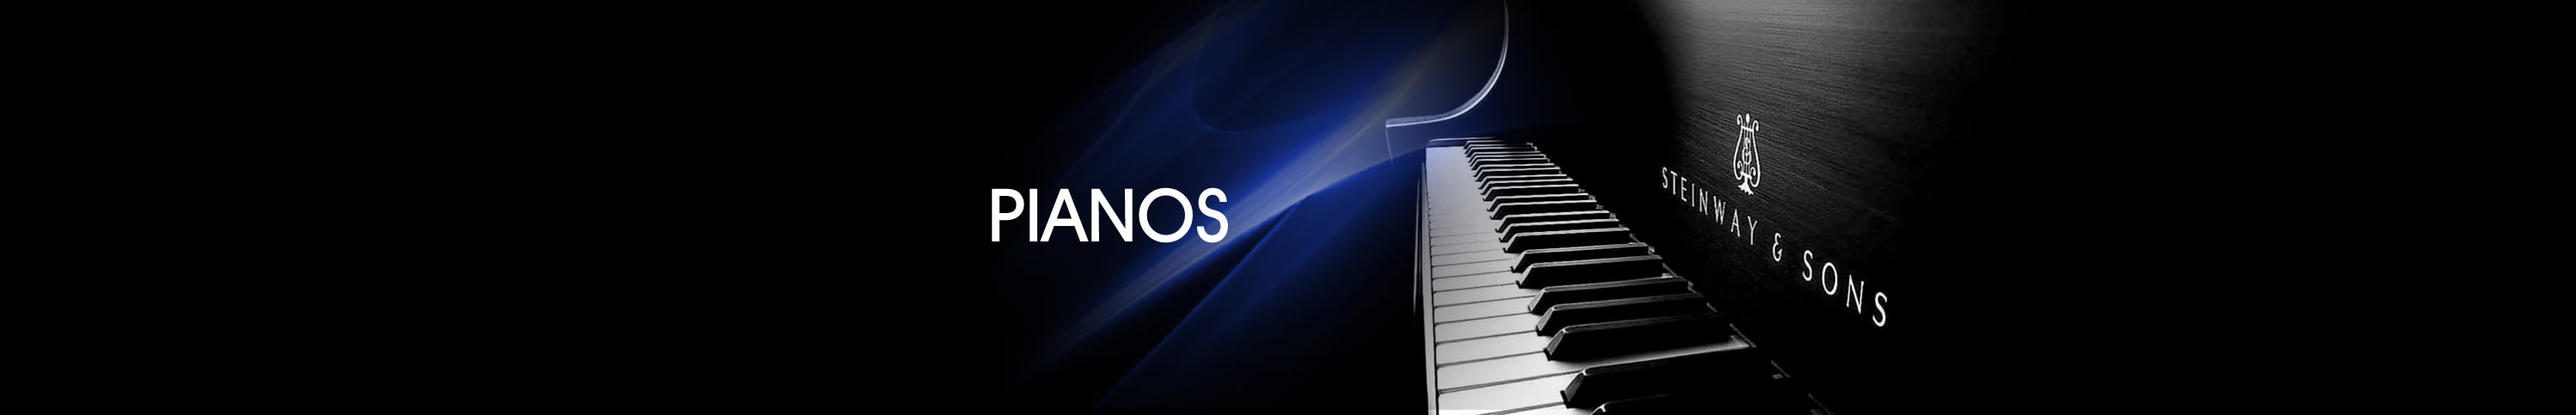 pianos-2